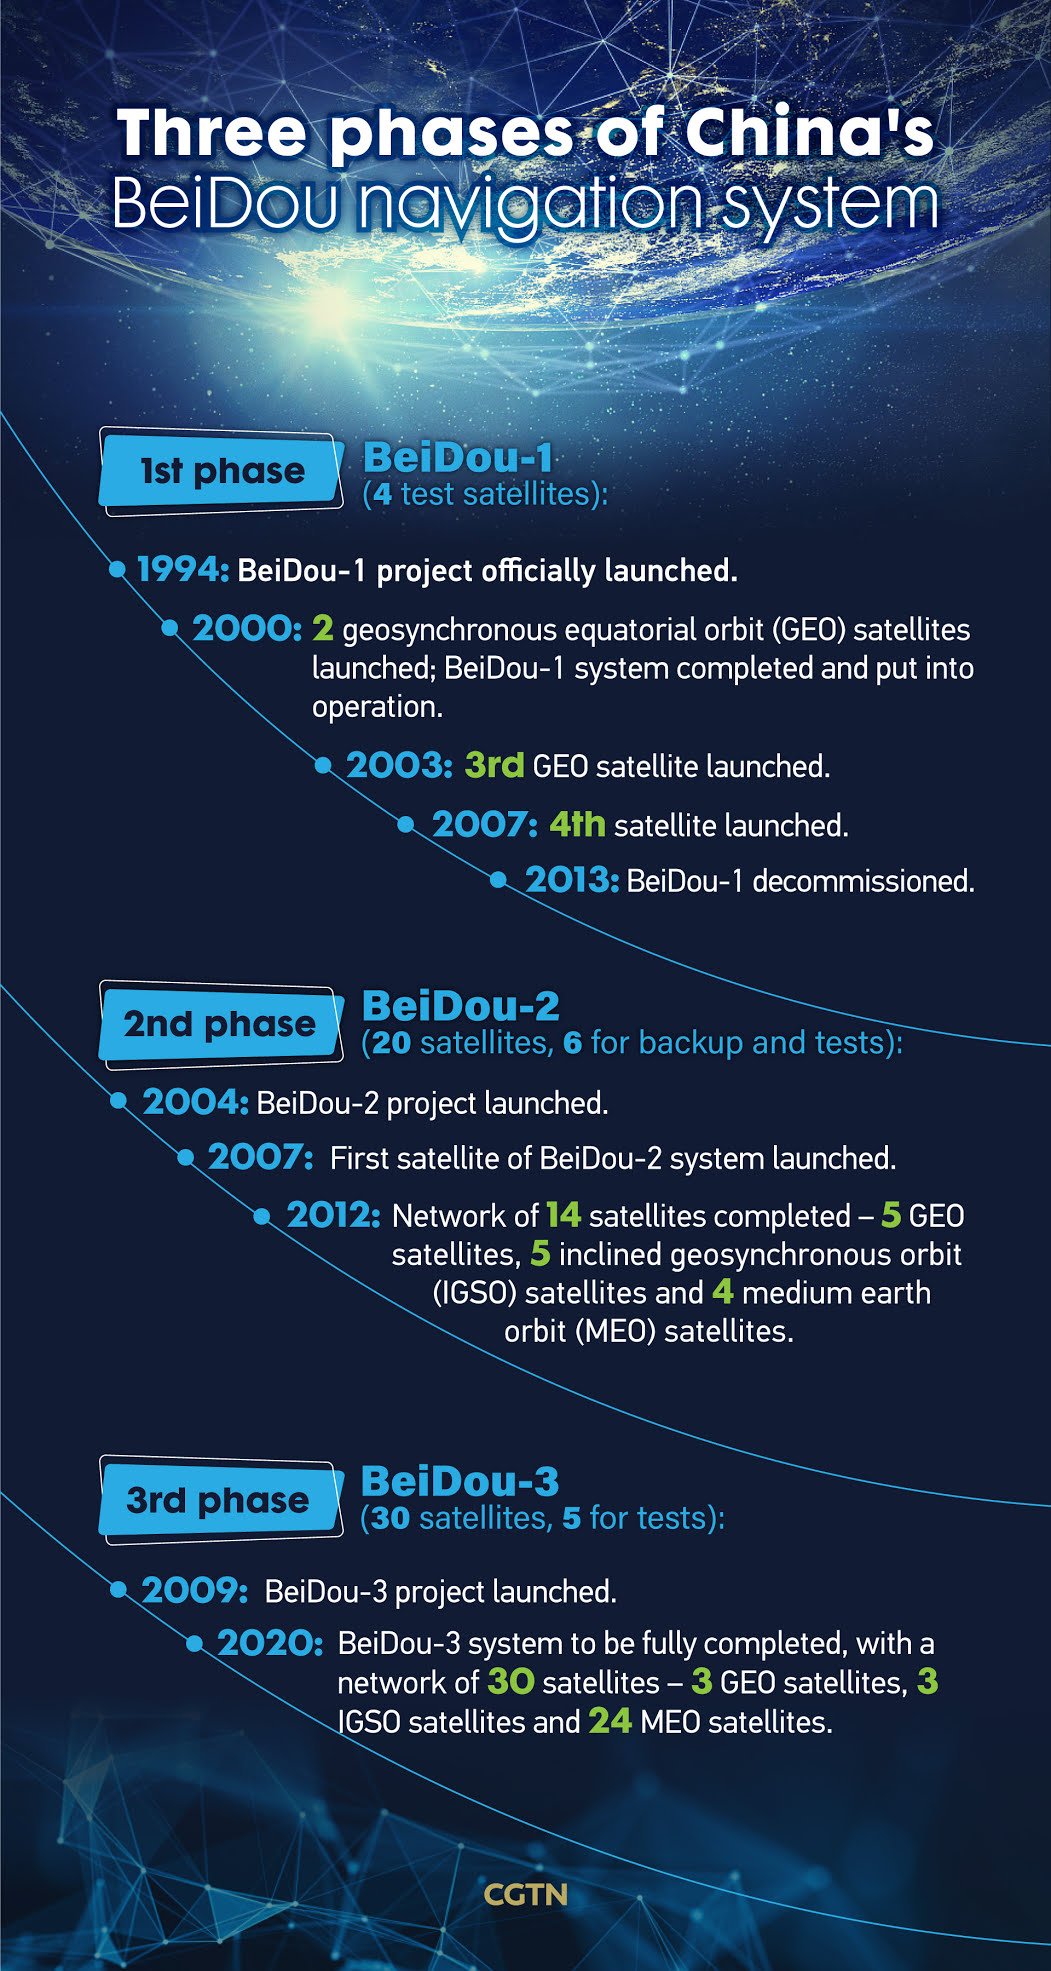 Three Phases of BeiDou Navigation System (CGTN) 20200623.jpeg